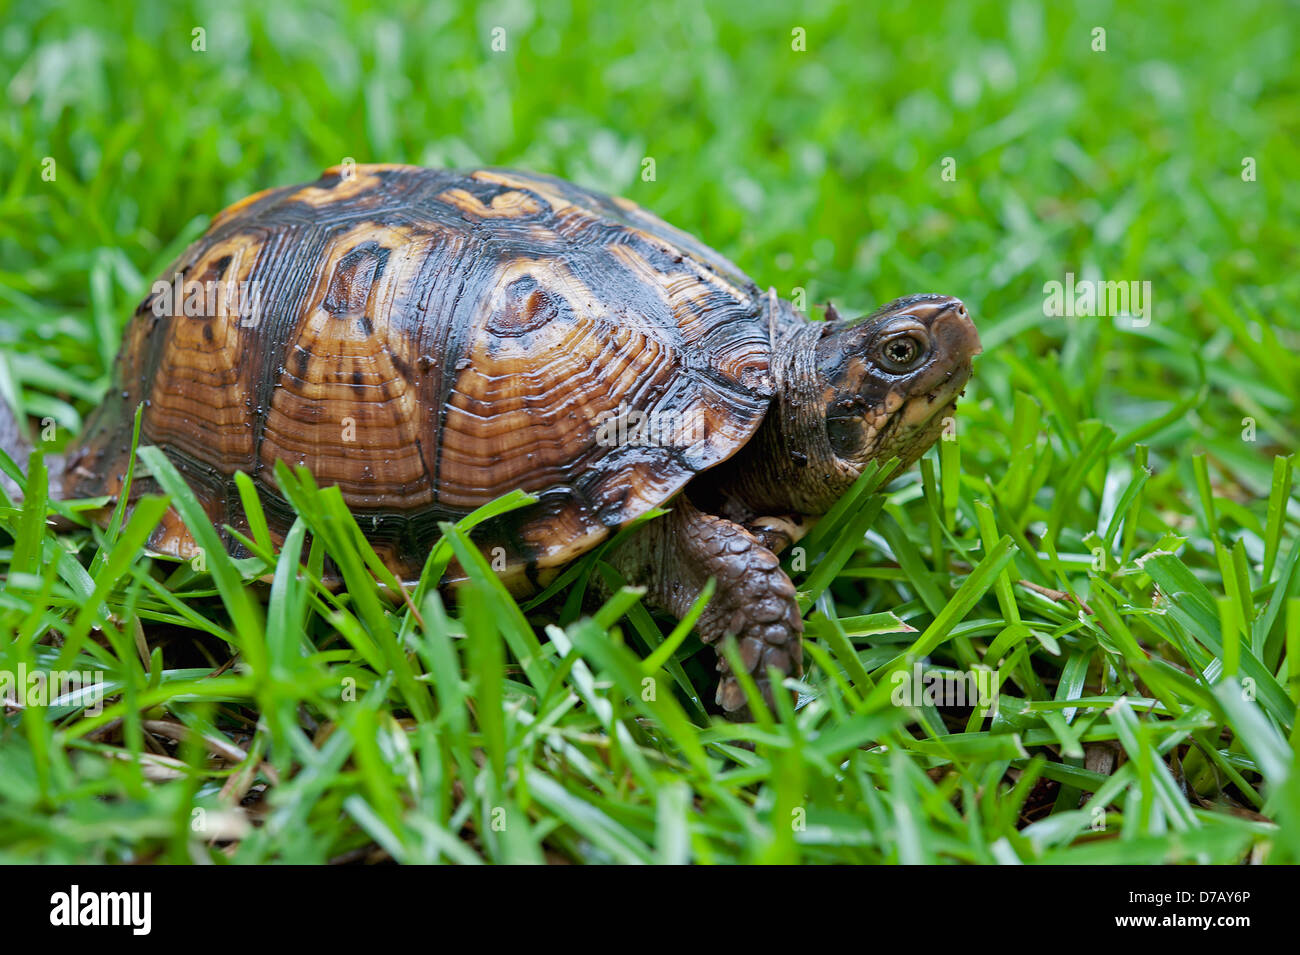 Tortoise In The Grass;Tuscaloosa Alabama United States Of America Stock Photo